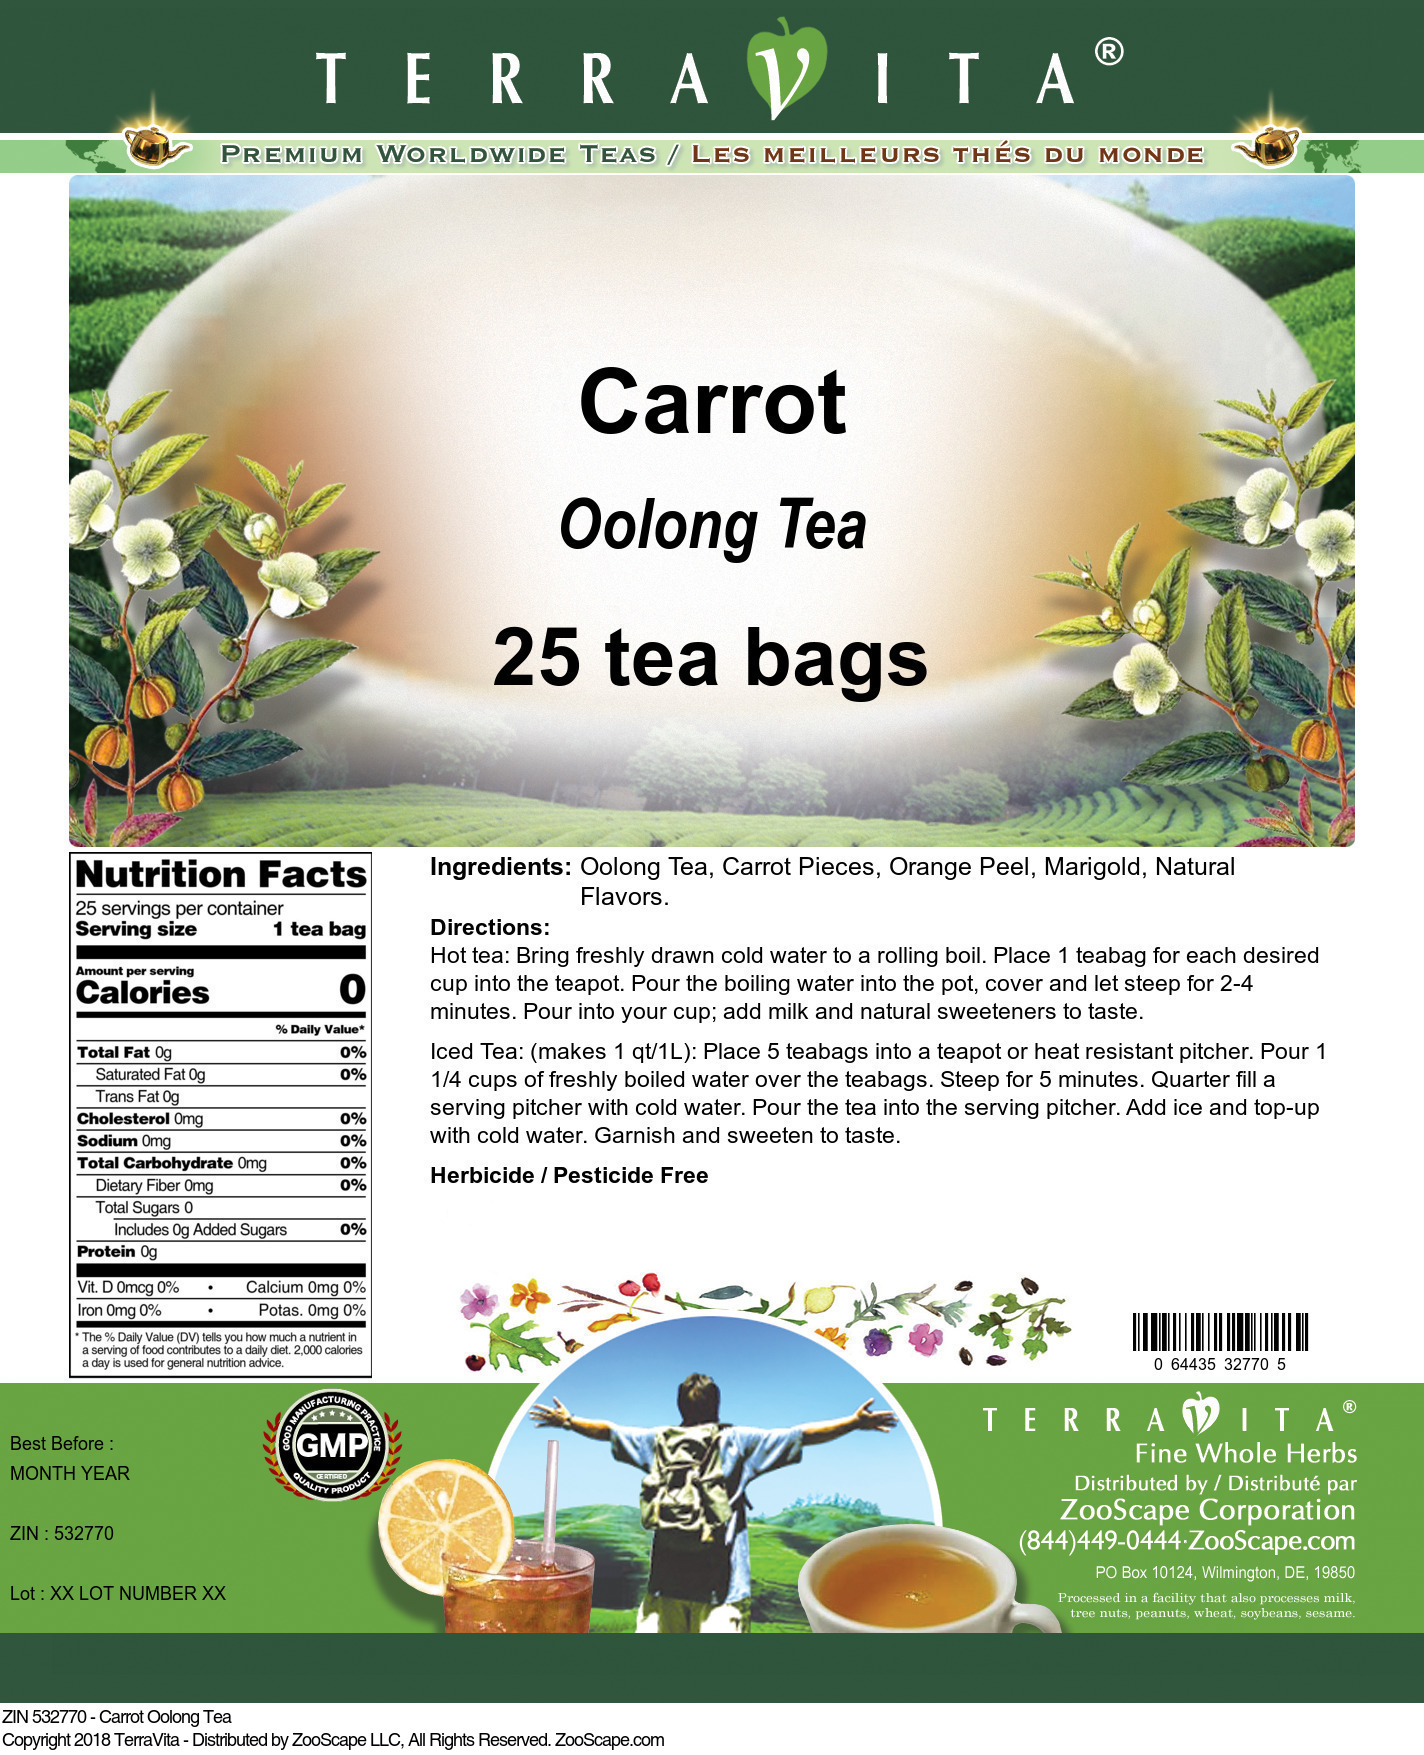 Carrot Oolong Tea - Label